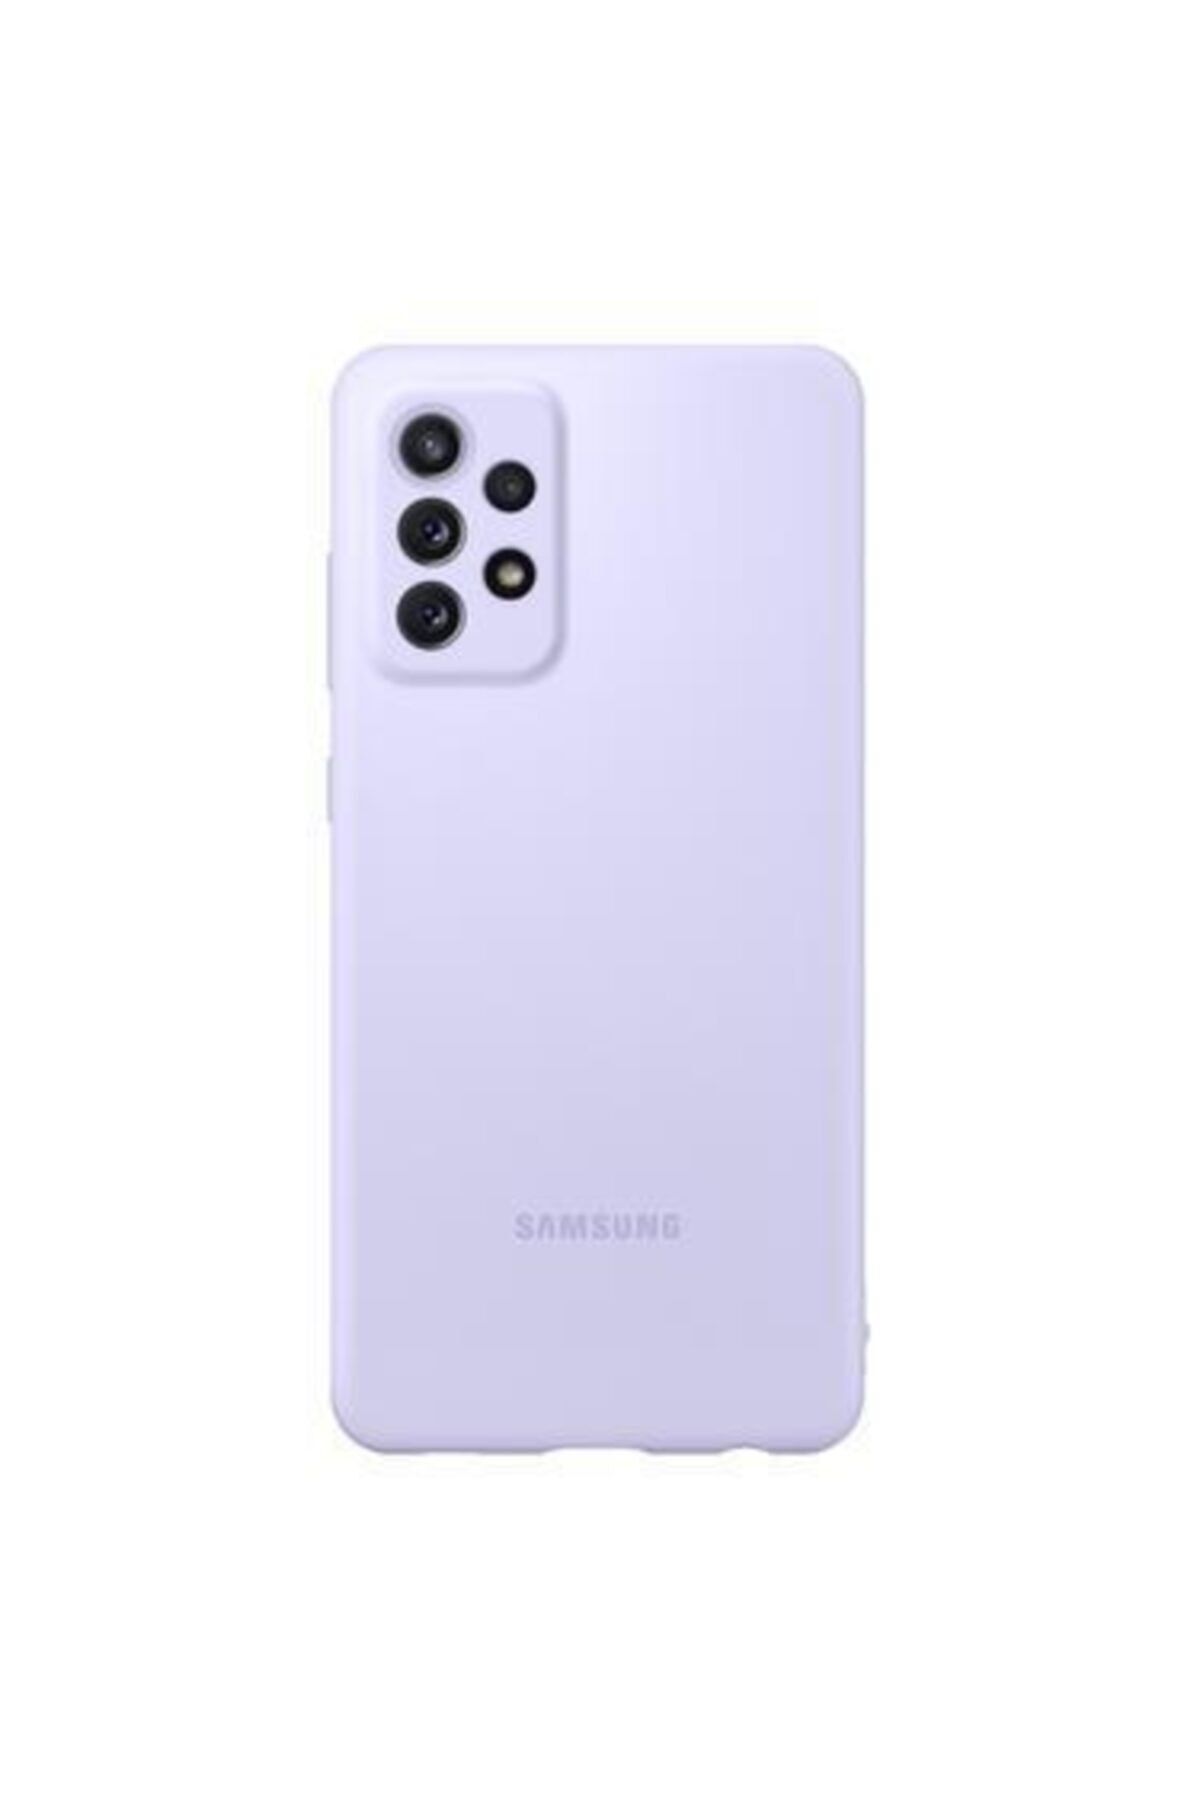 Samsung Galaxy A72 Slim Silikon Kılıf - Mor Ef-pa725tvegww